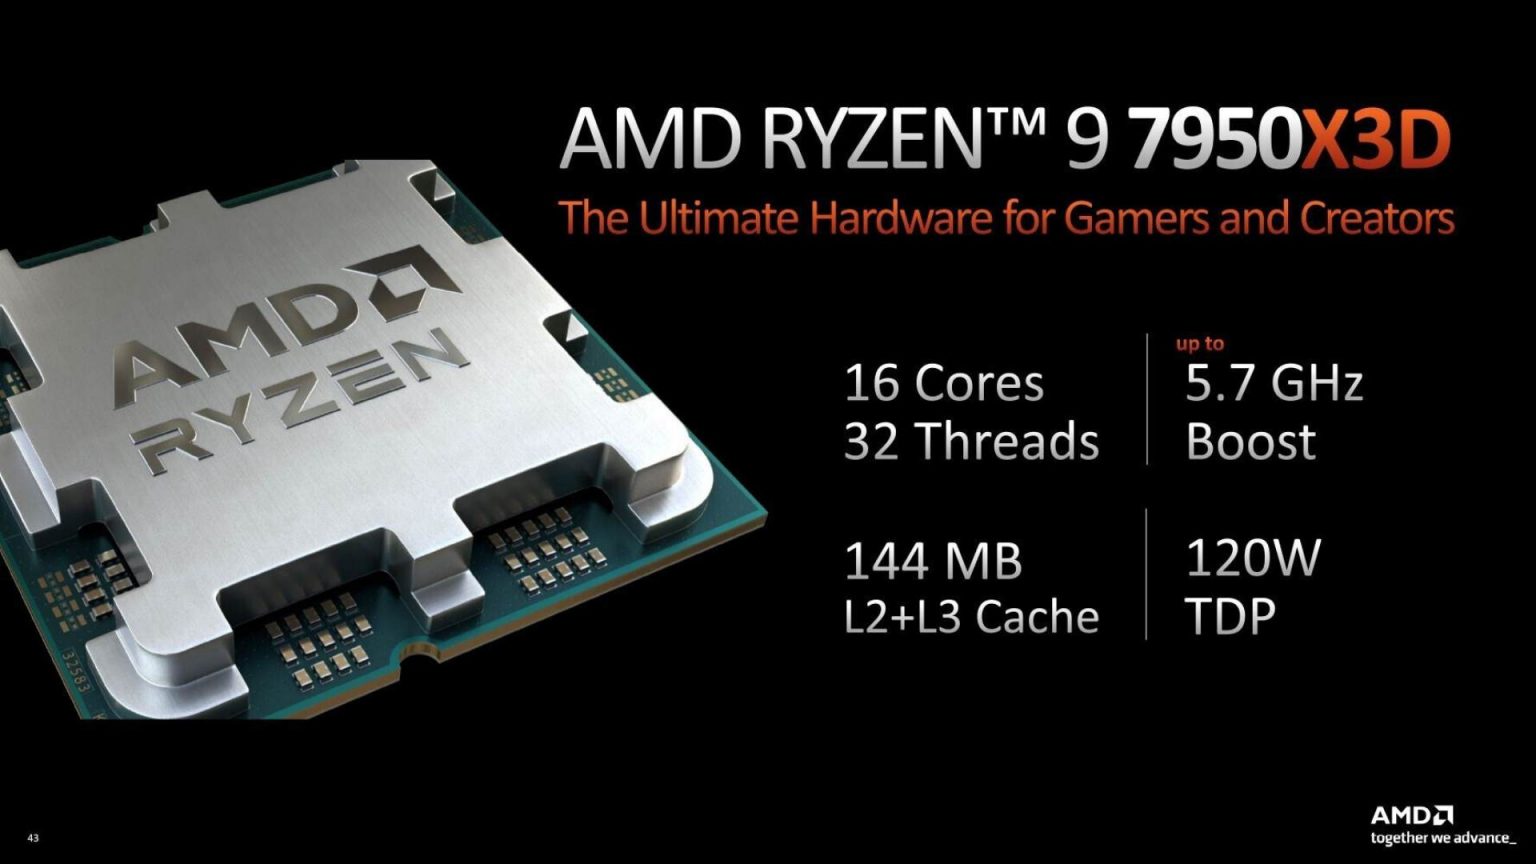 AMD RYZEN 9 7950X3D - Game Buddy